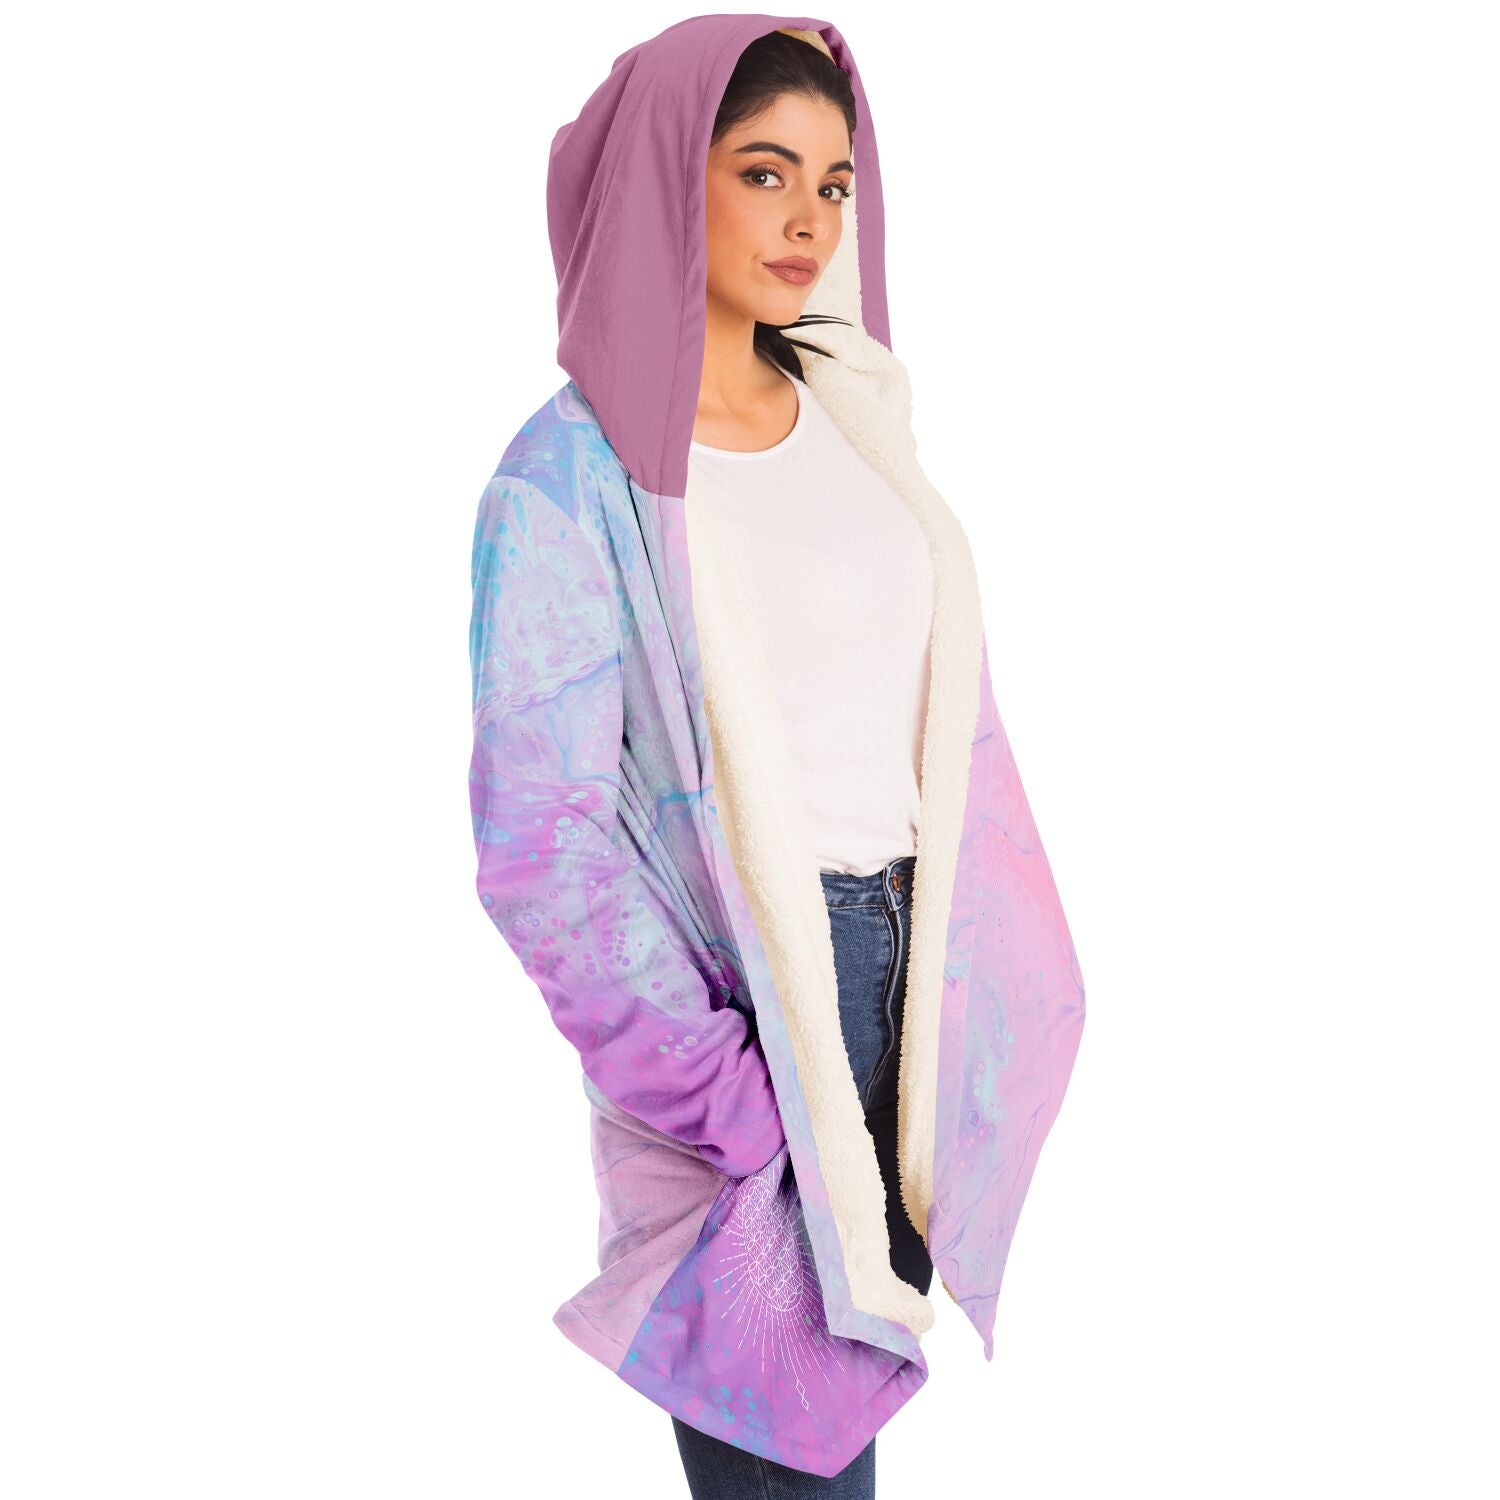 Soul Star Chakra Mandala Microfleece Hooded Cloak